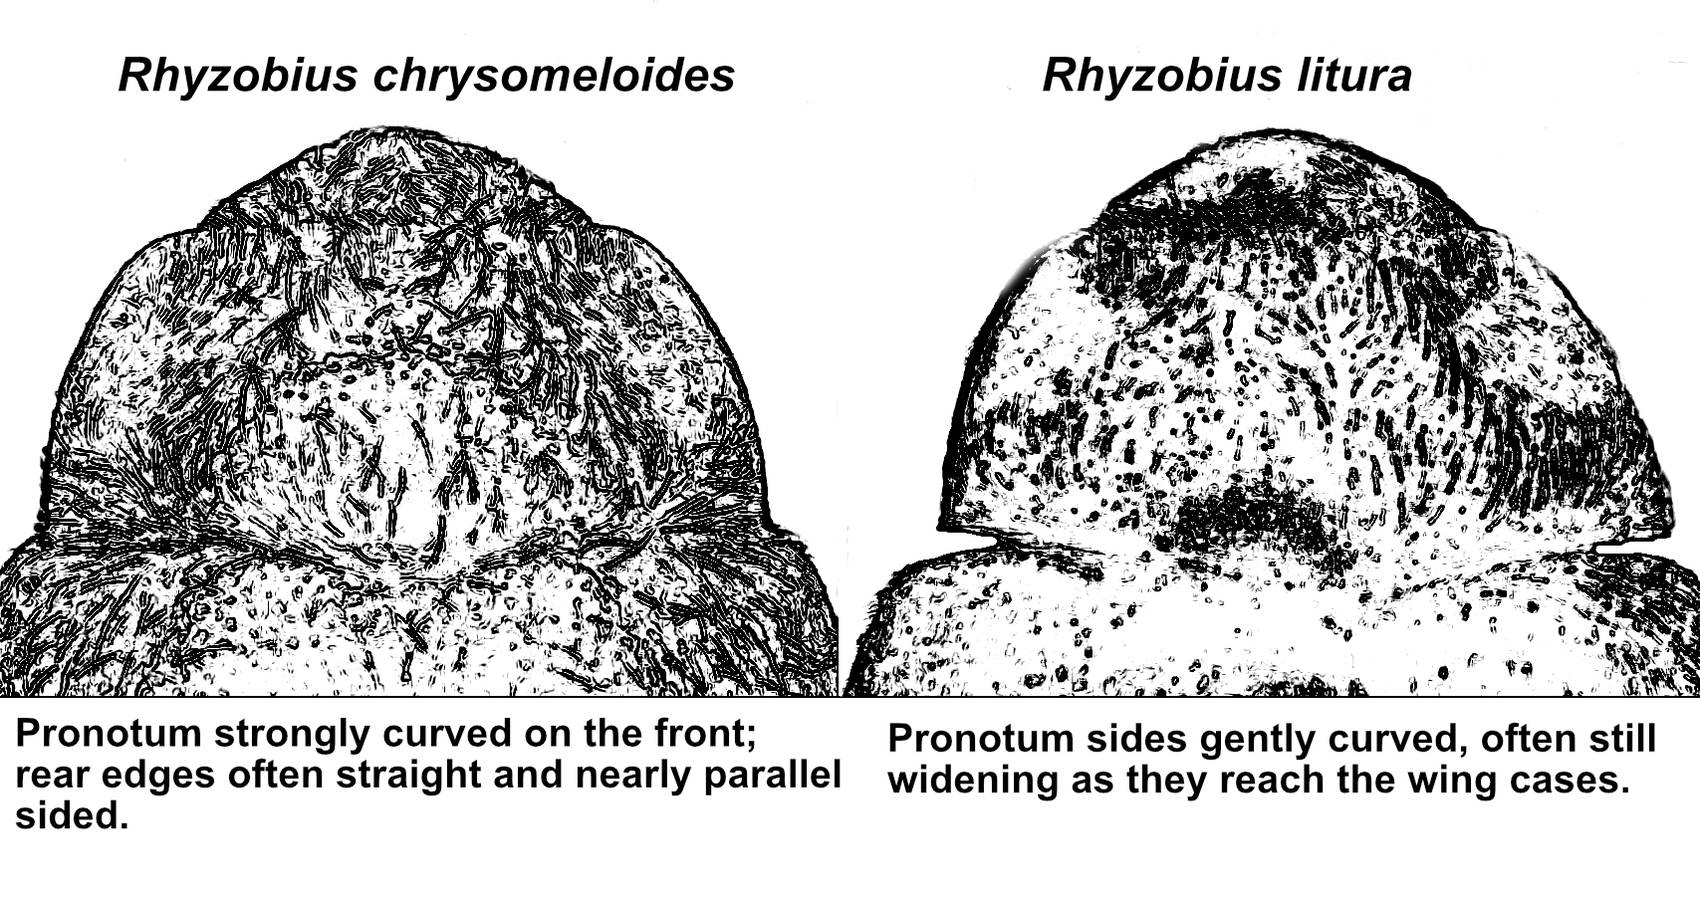 Rhyzobius chrysomeloides versus Rhyzobius litura